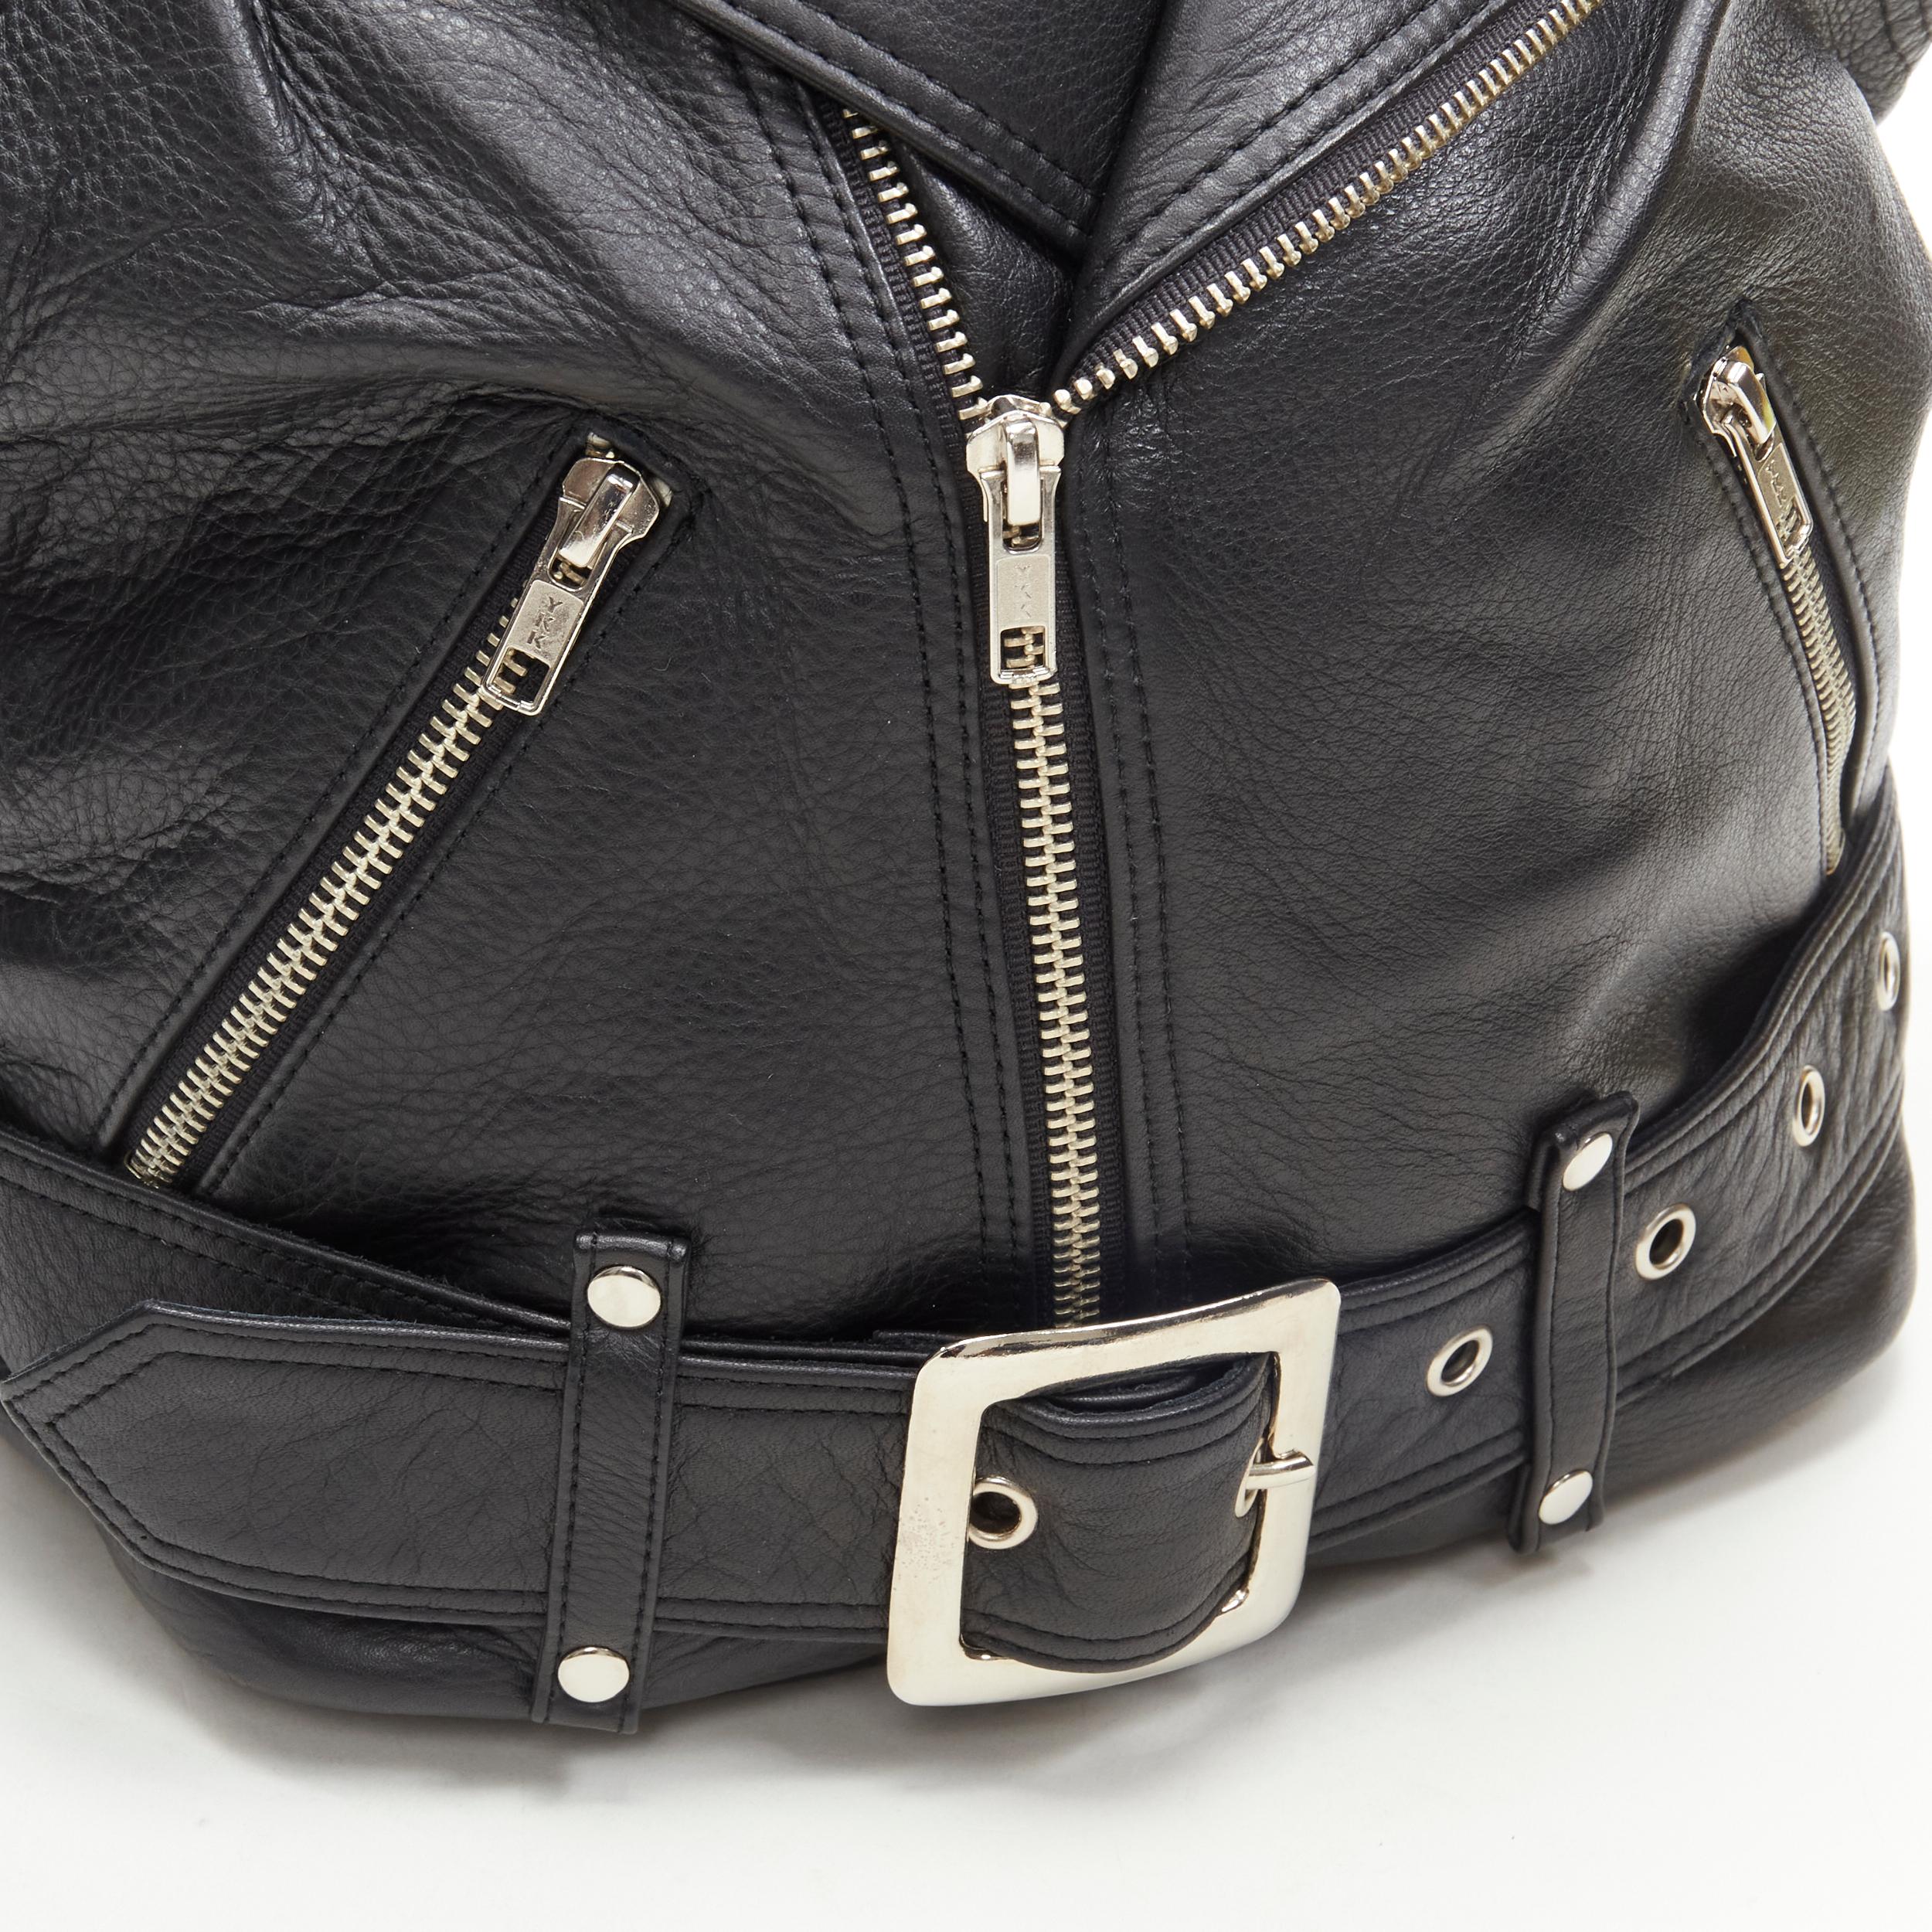 Women's JEREMY SCOTT black leather biker jacket design bucket backpack bag